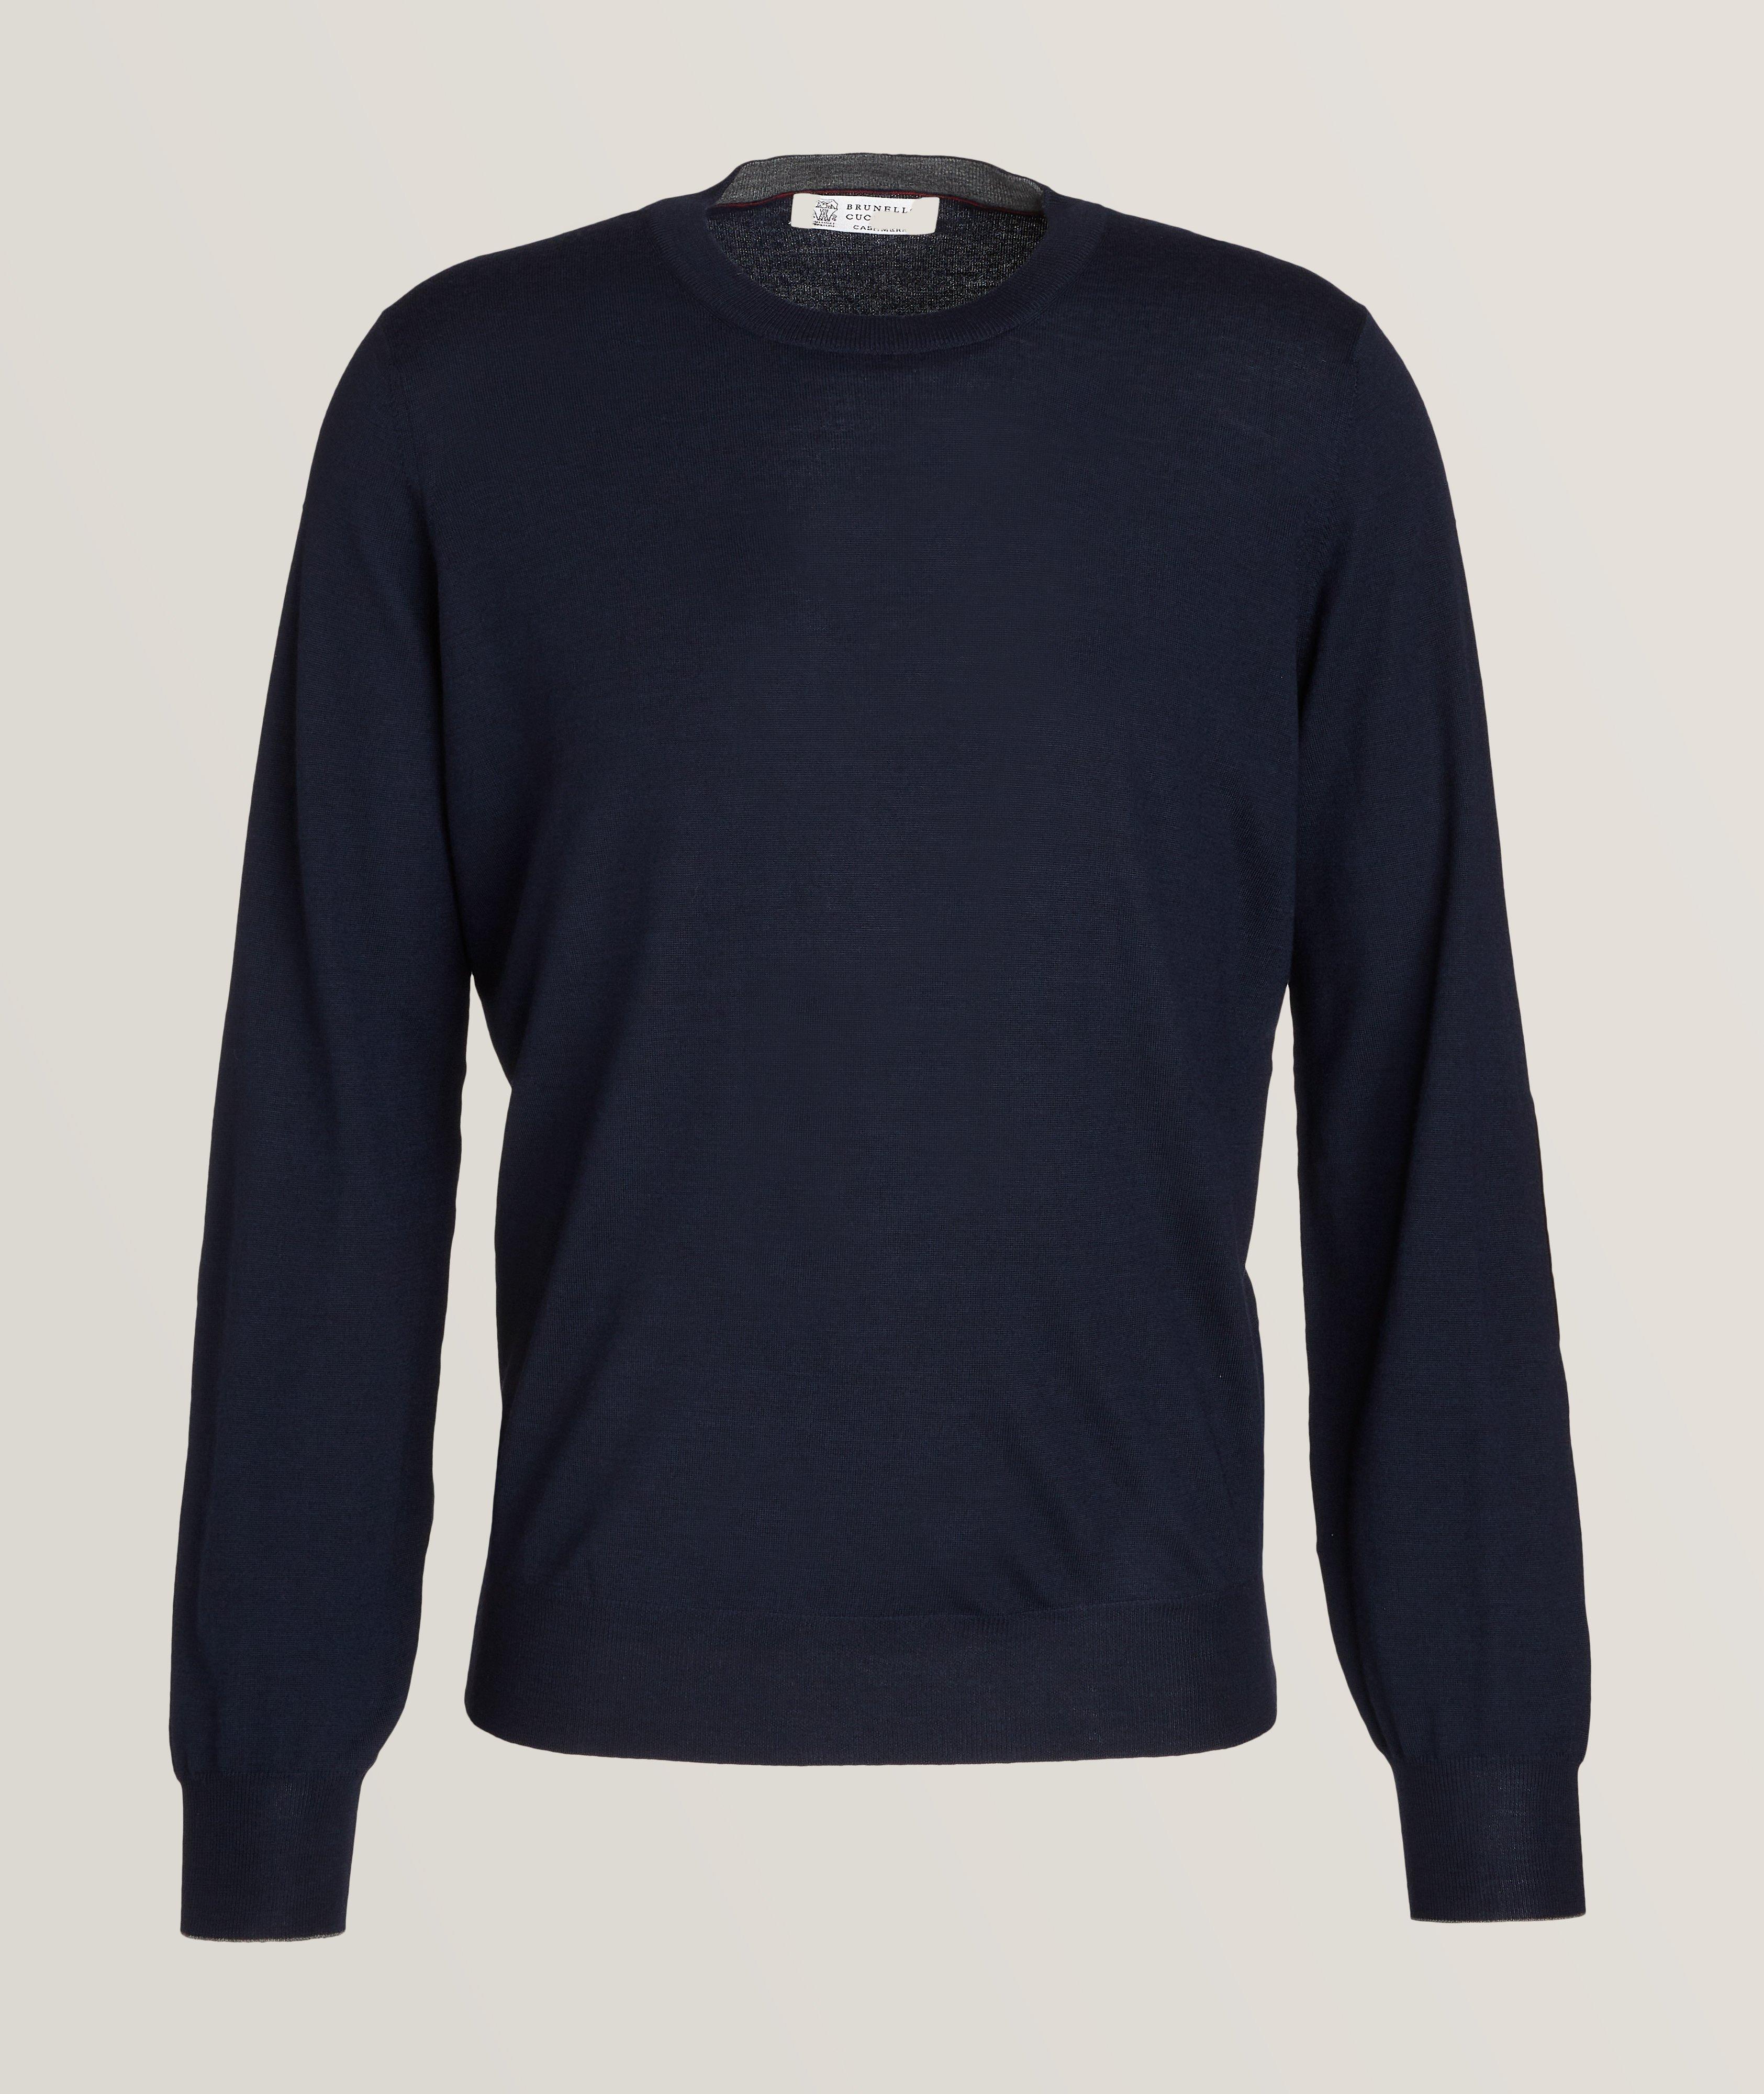 Brunello Cucinelli Virgin Wool-Cashmere Sweater | Sweaters & Knits ...